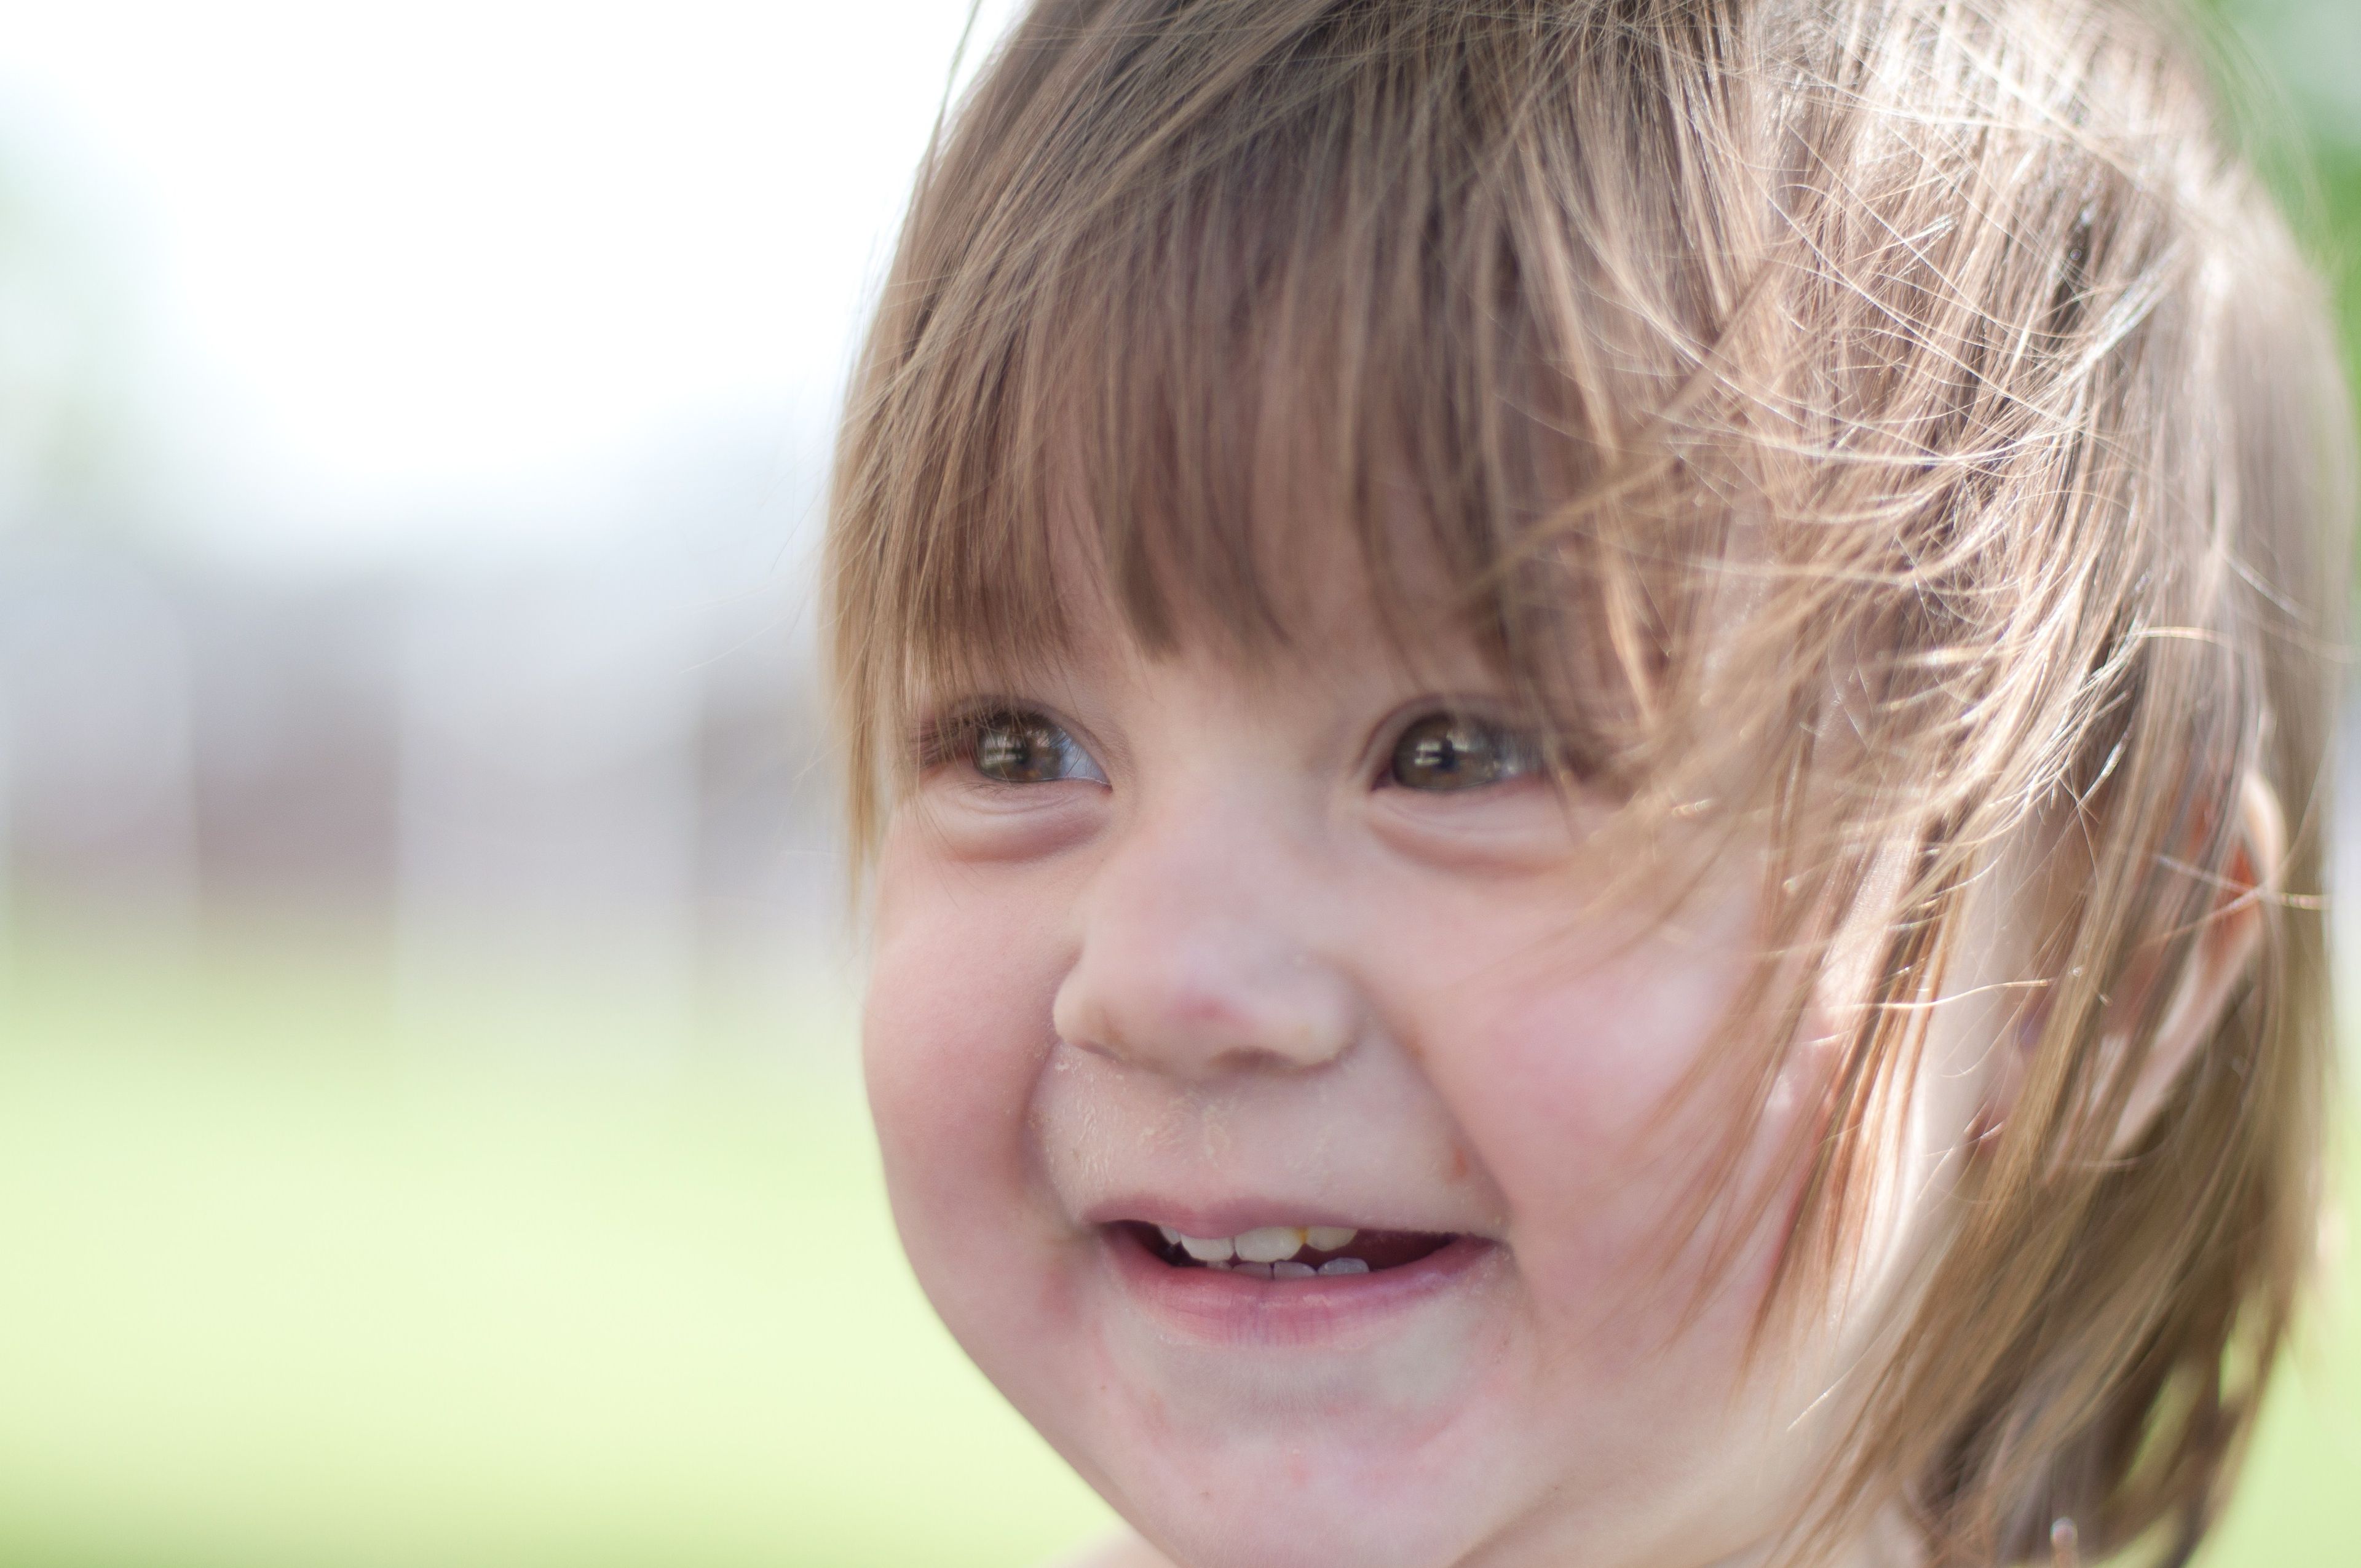 A toddler girl smiling.